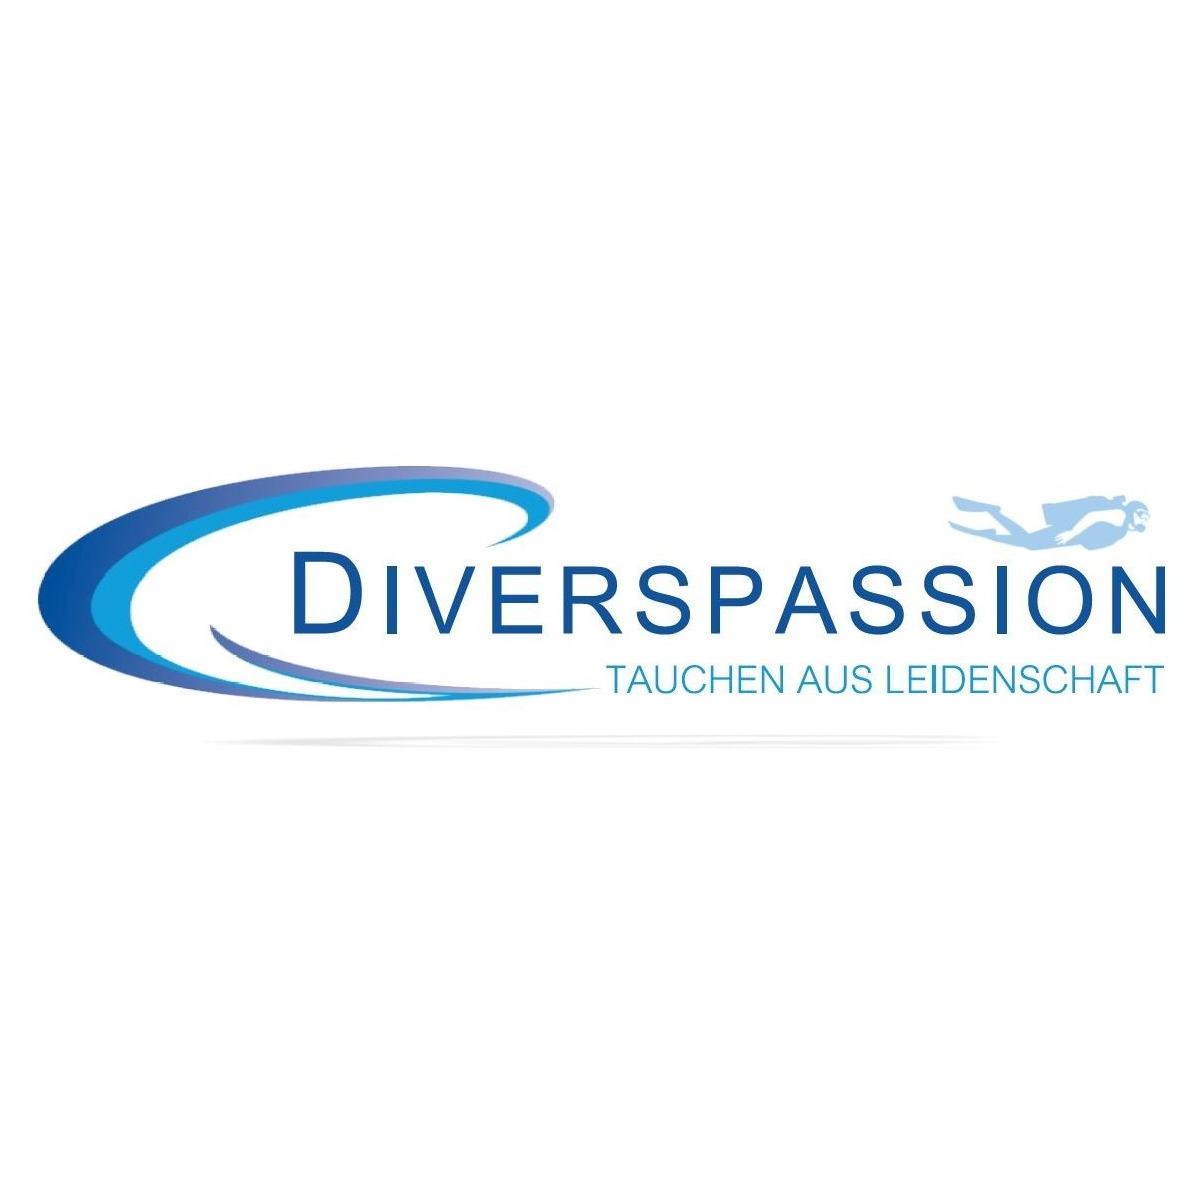 Diverspassion Logo